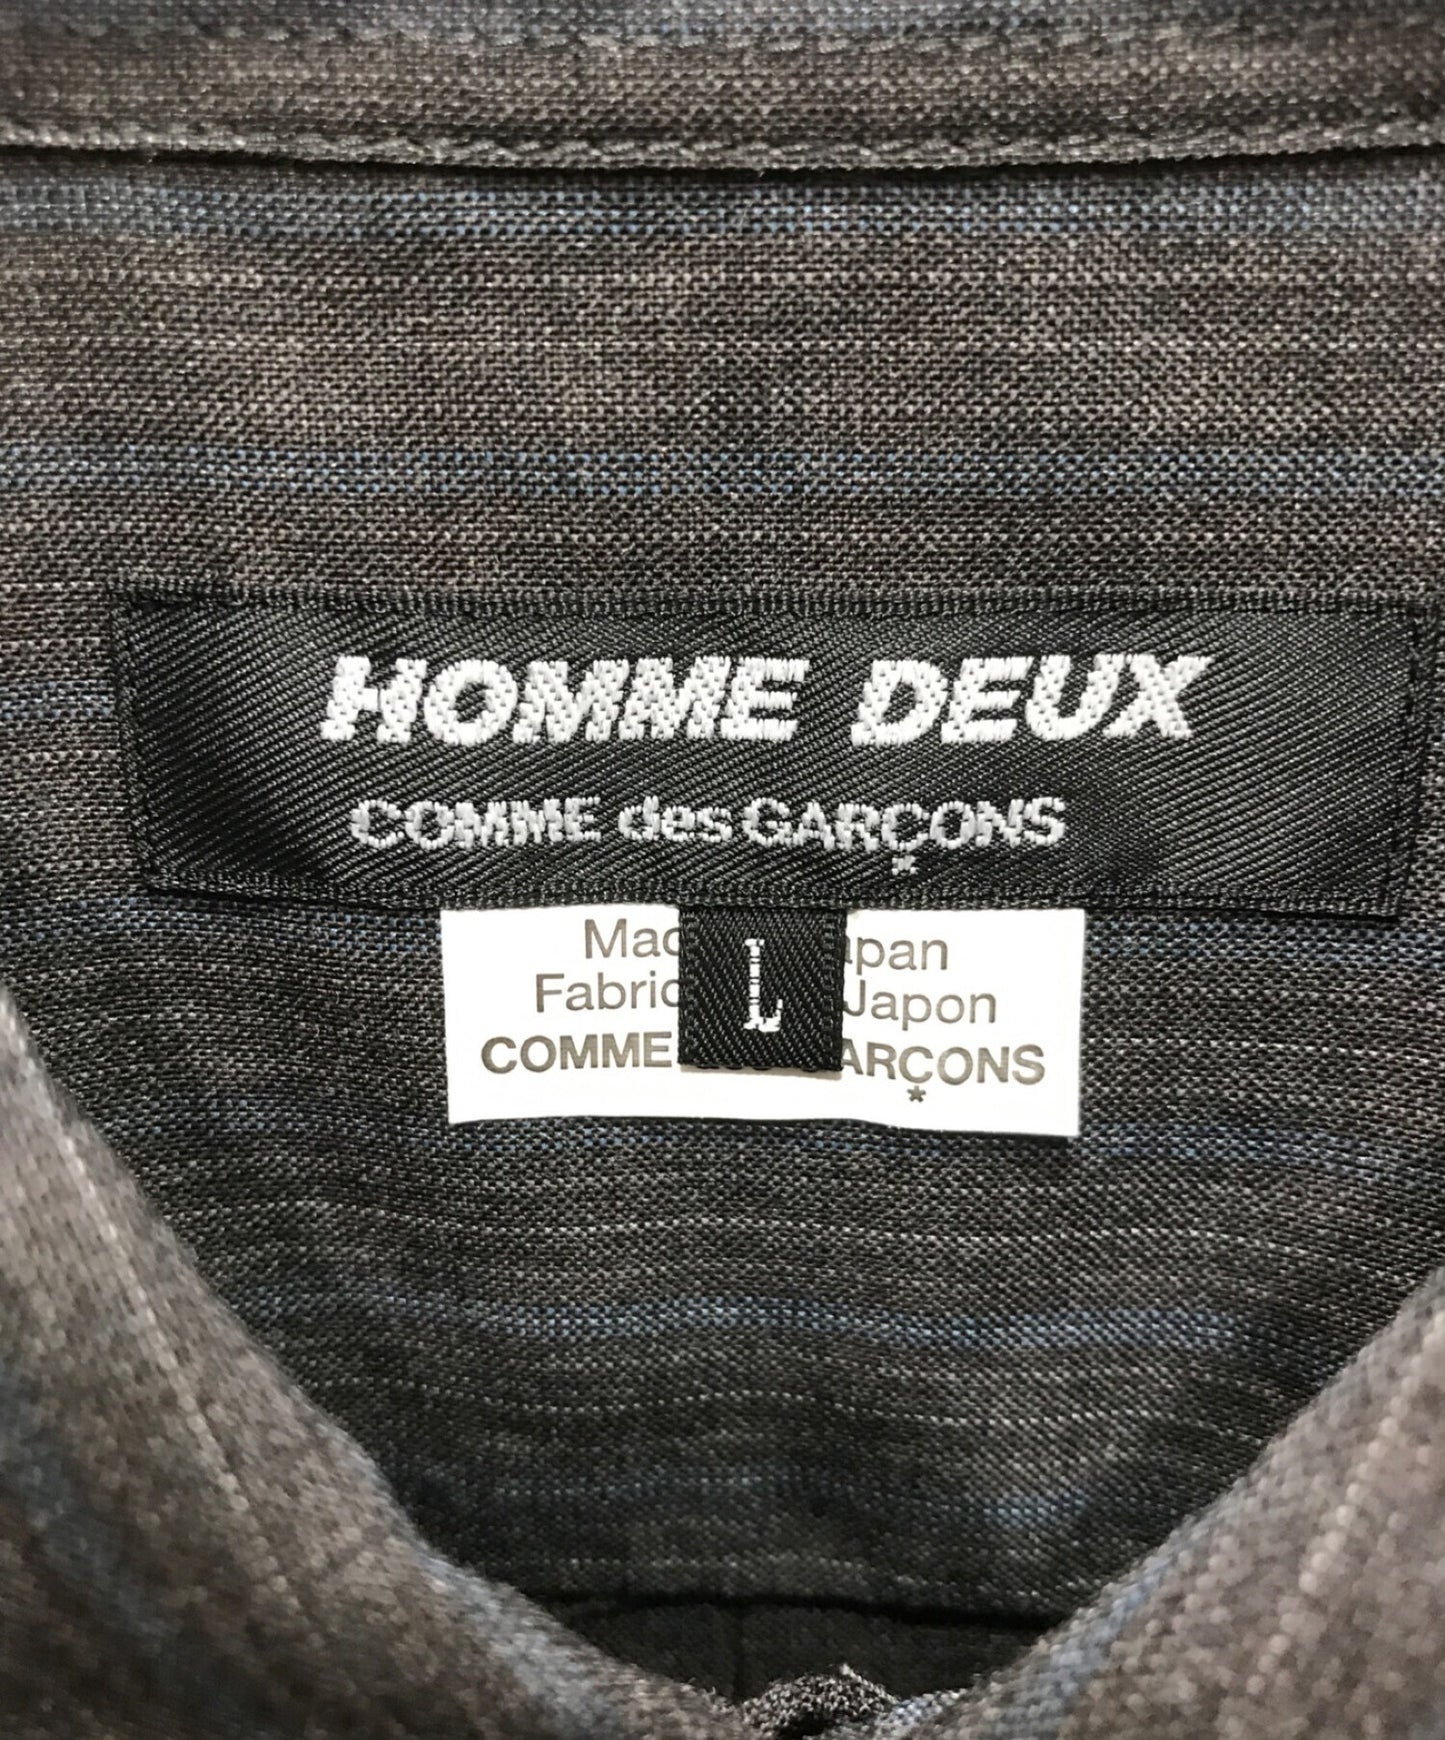 Comme des Garcons Homme Deux Wool Striped Shirt DB-B039